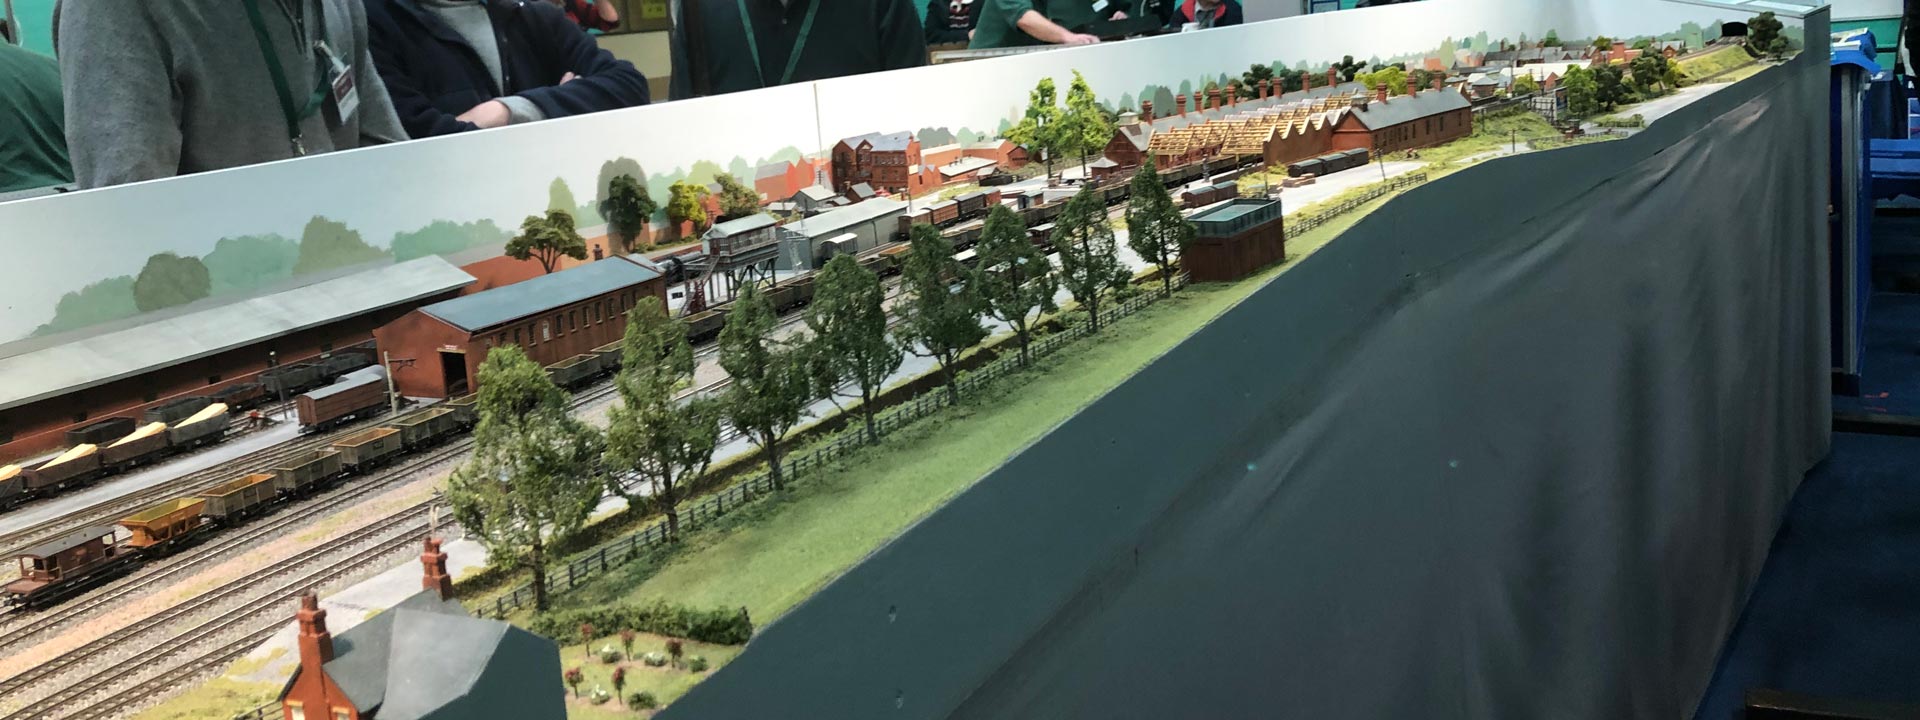 Southampton Model Railway Exhibition Layout